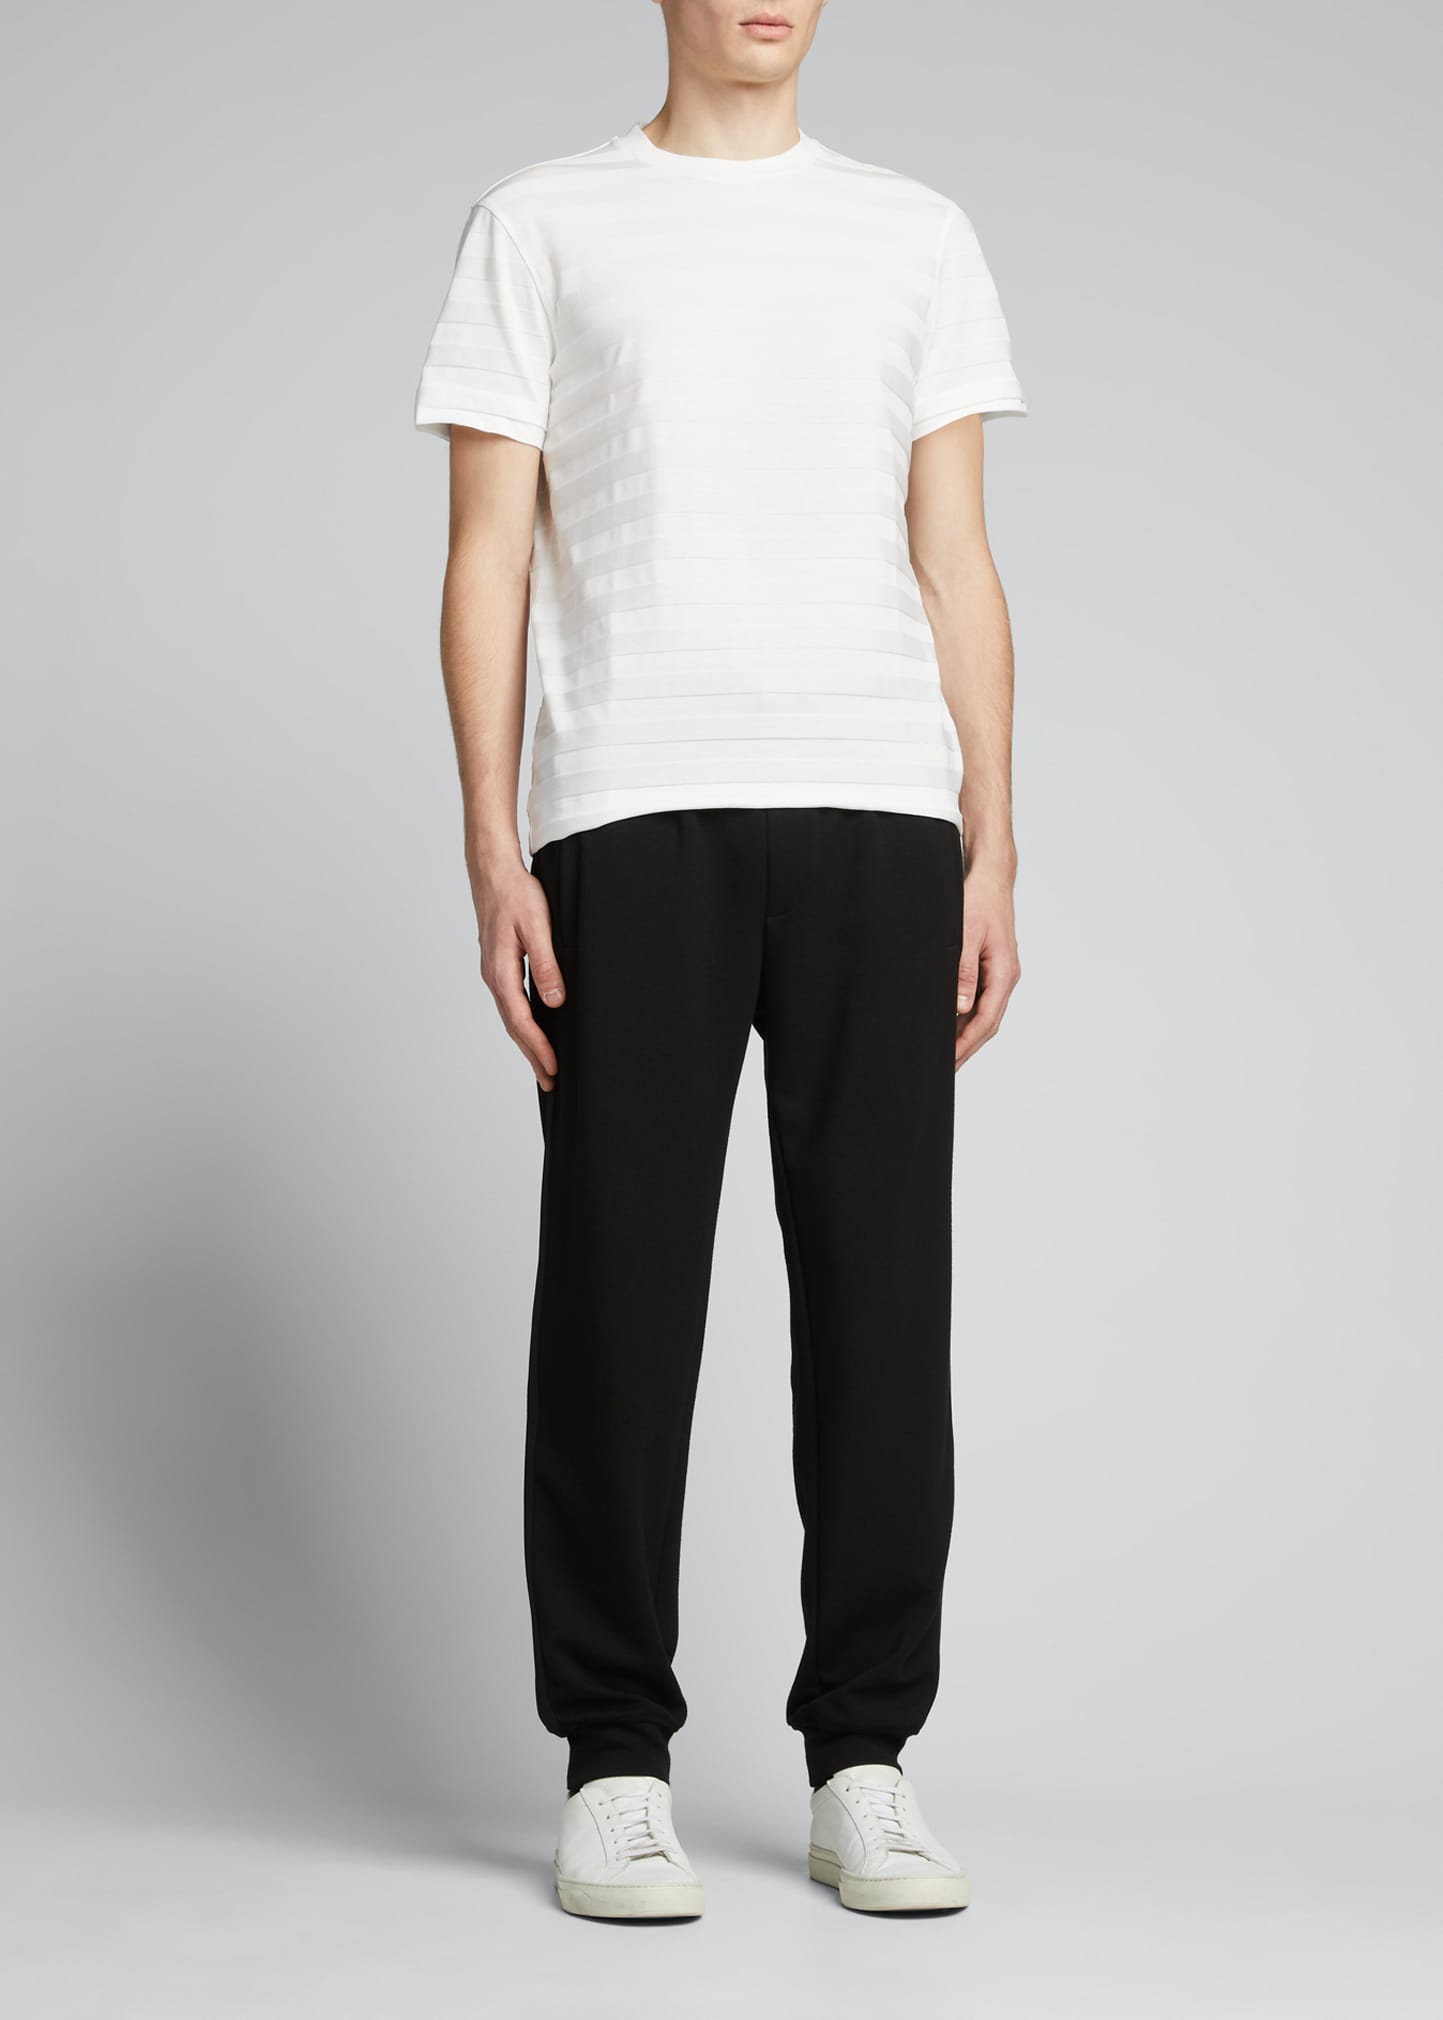 Emporio Armani Men's Horizontal Tonal Stripe T-Shirt